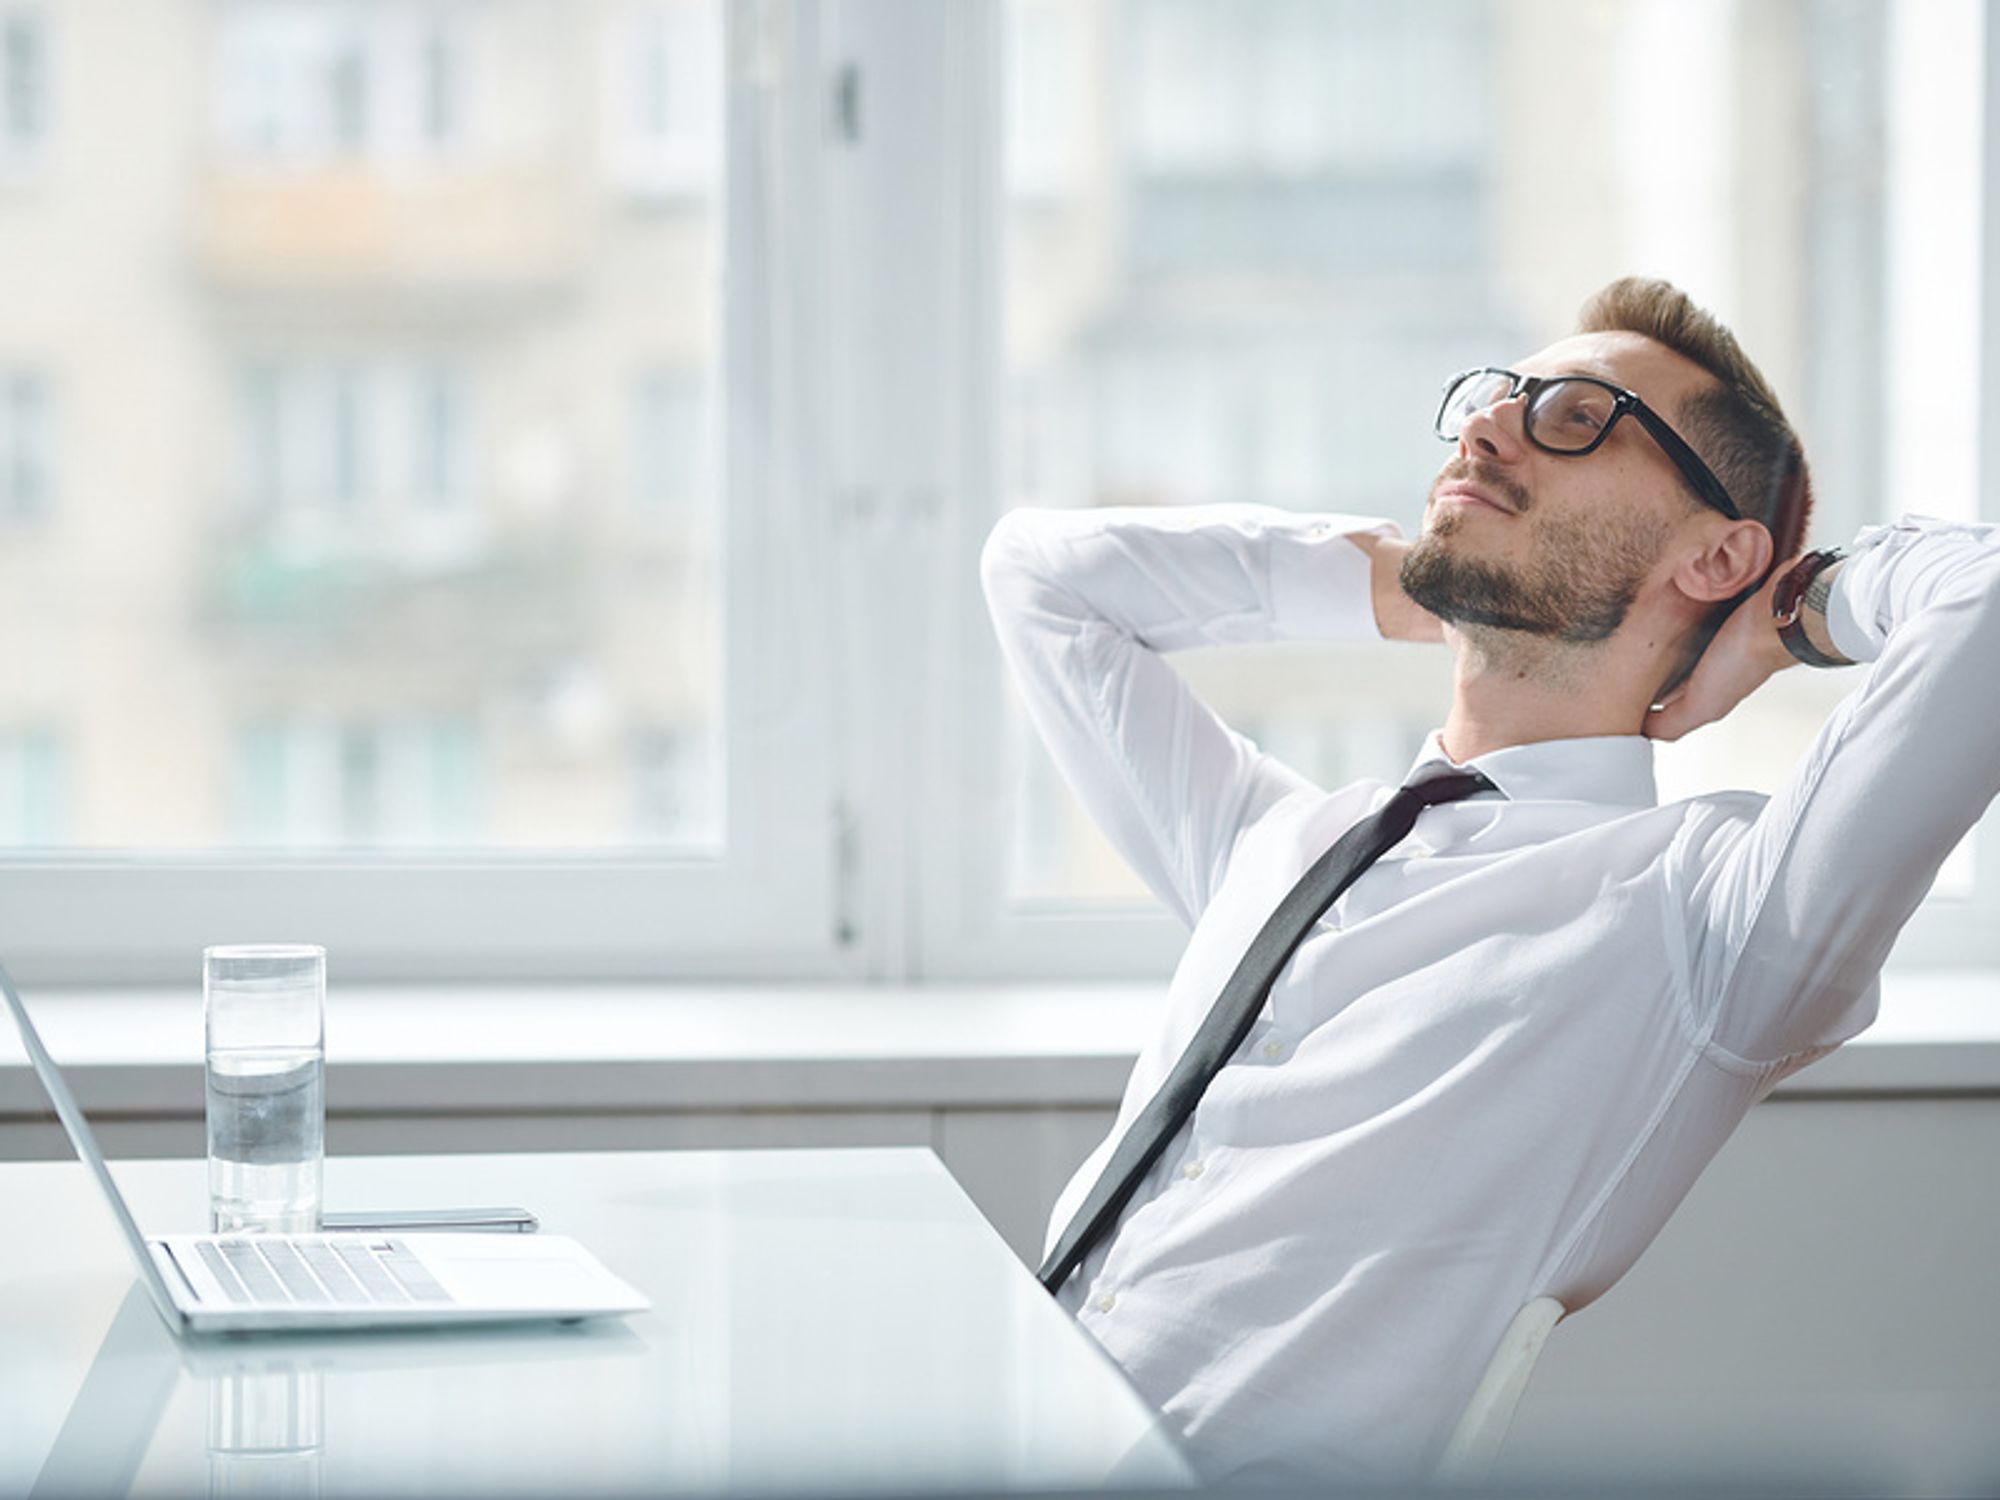 Professional man achieves work-life balance